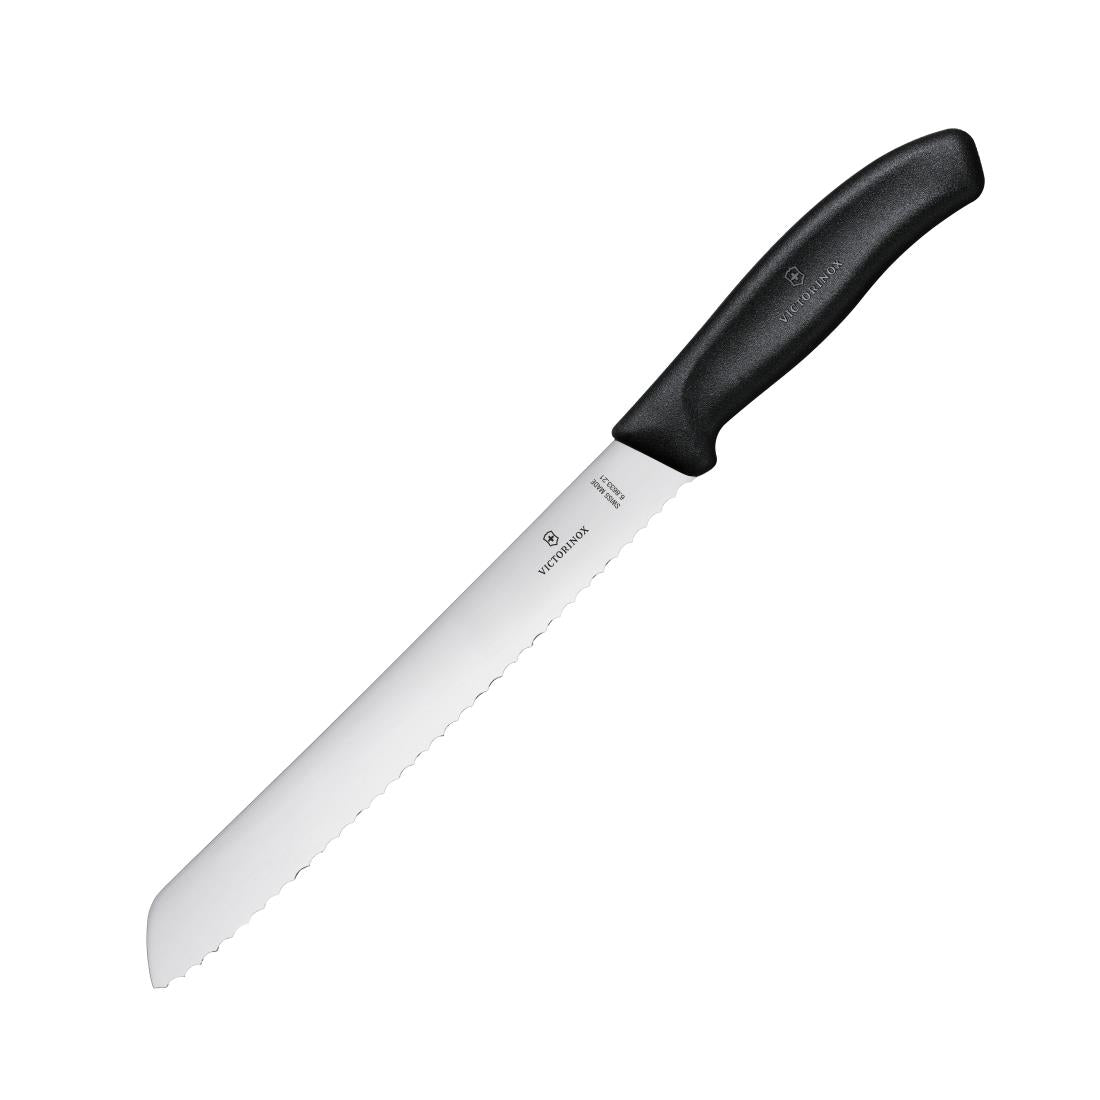 CX745 Bread Knife, Serrated Edge (Blister Pack) 21cm Black JD Catering Equipment Solutions Ltd